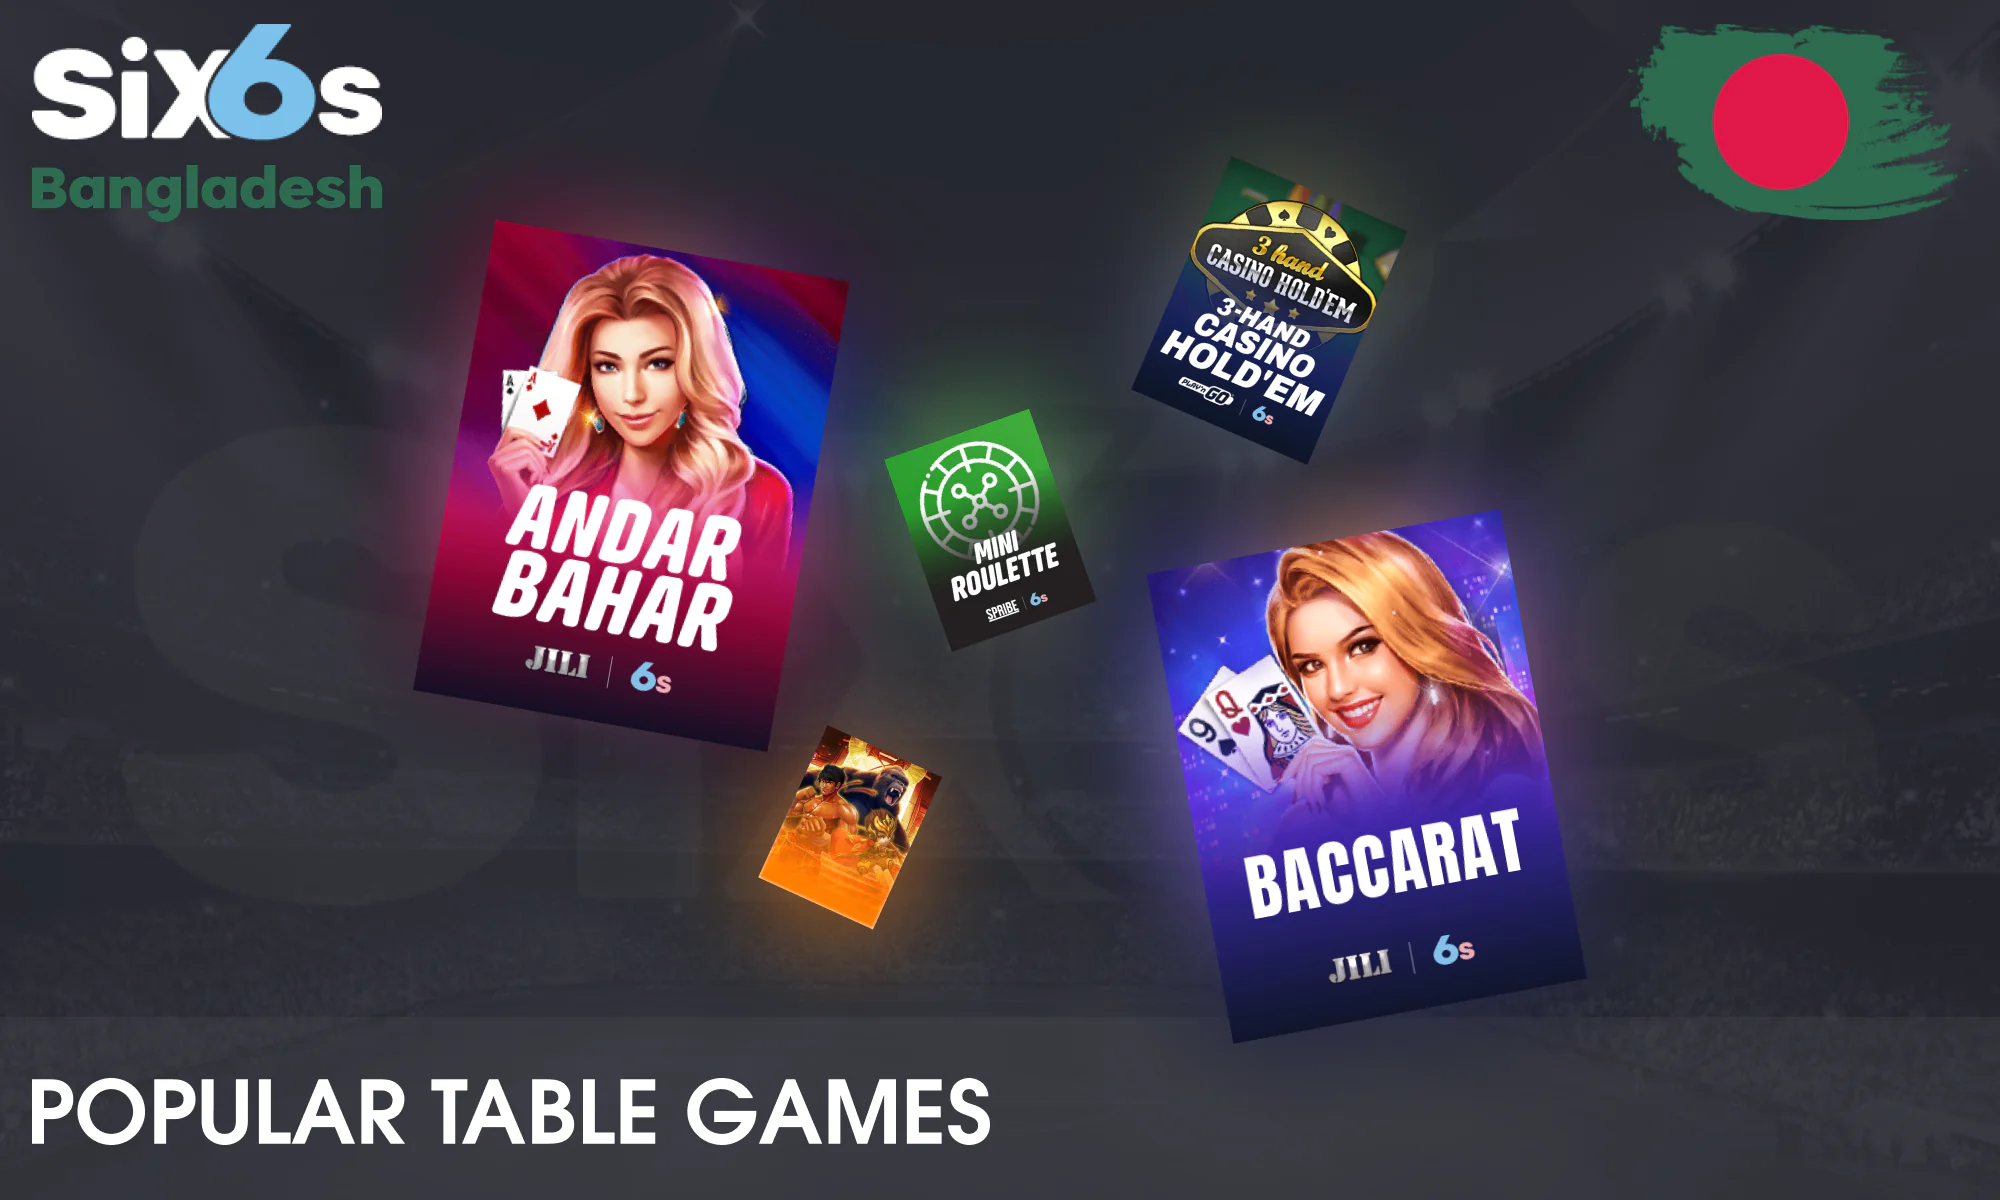 Popular table games for Bangladeshi gamblers at Six6s Casino